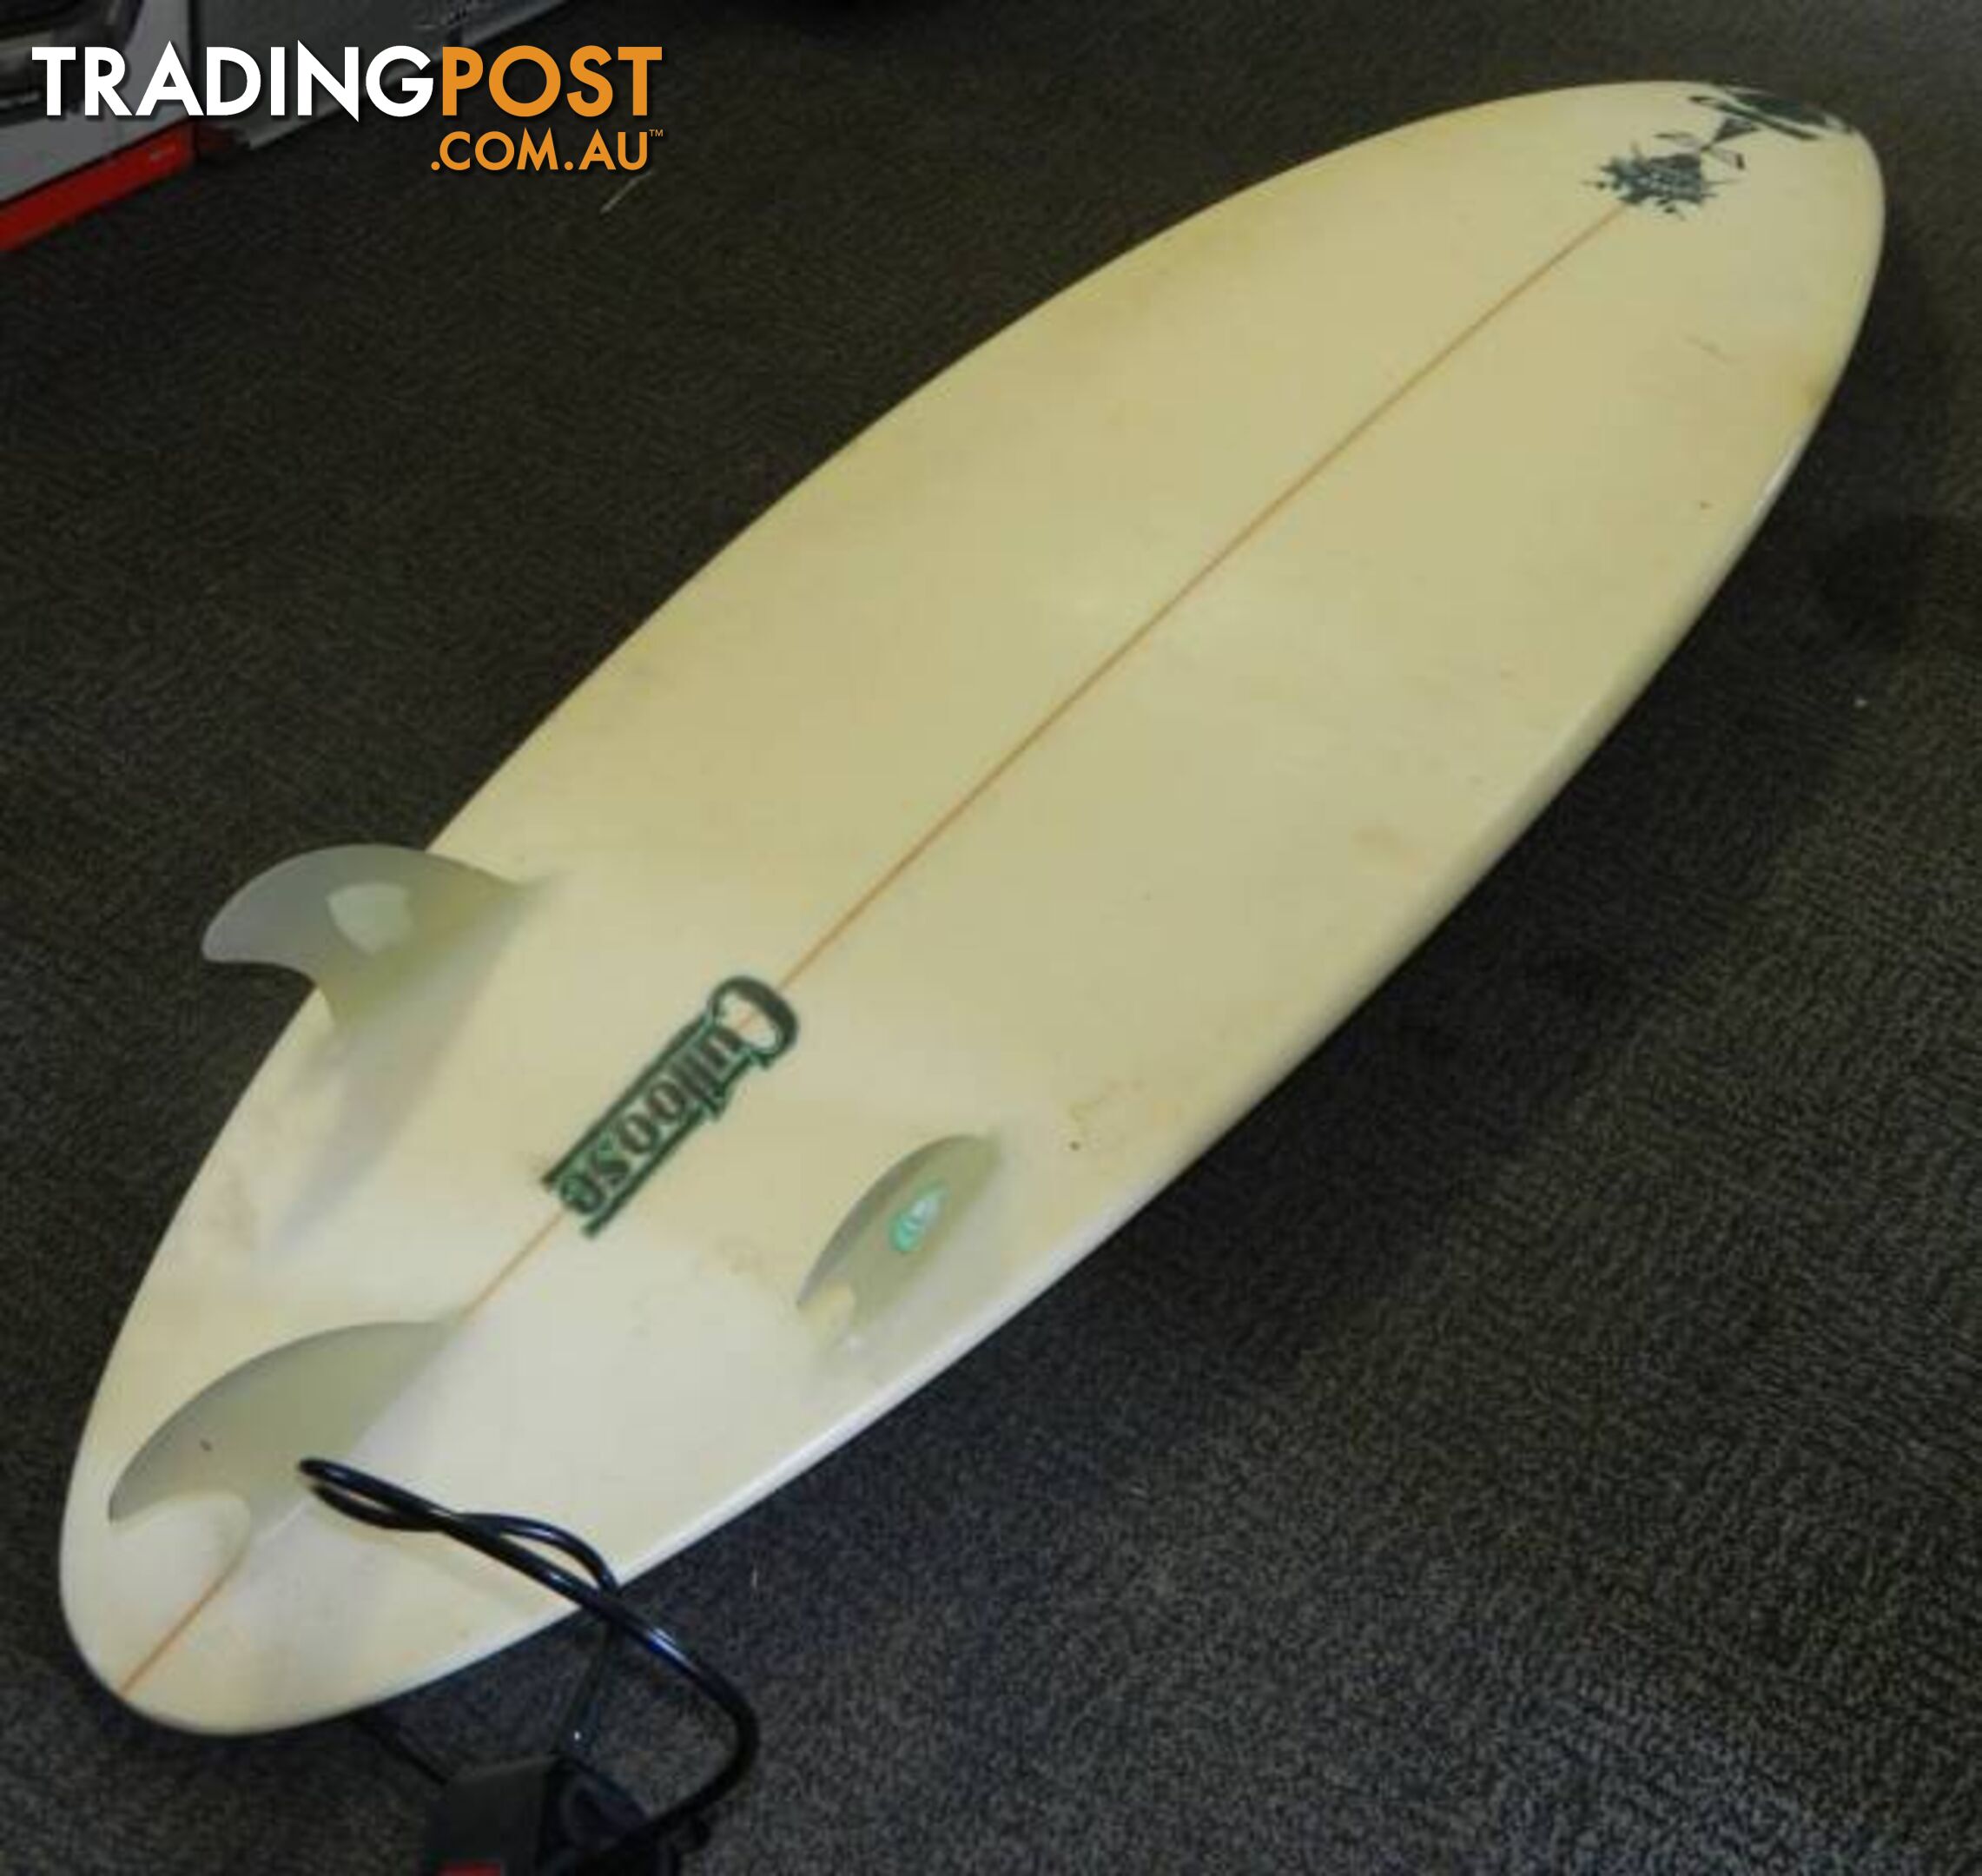 1.8m Cutloose Surfboard hand made by Jeff Hardick